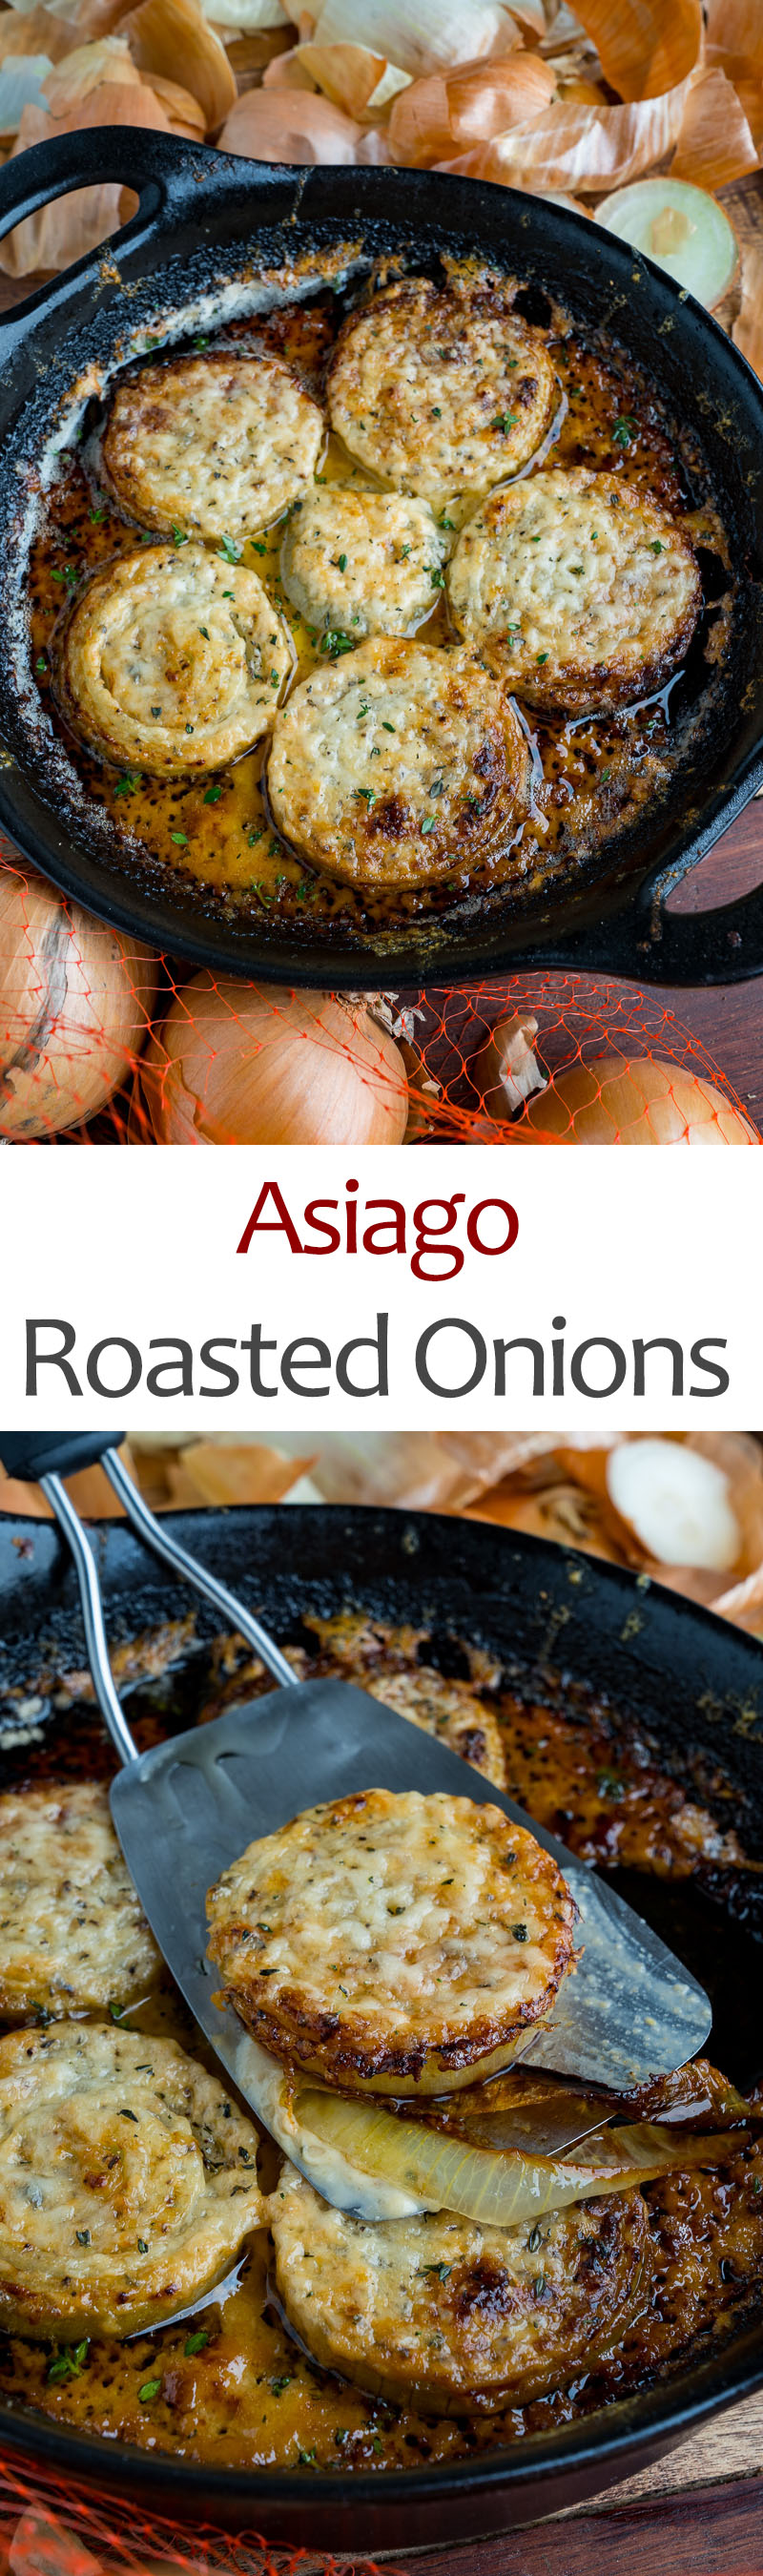 Asiago Roasted Onions